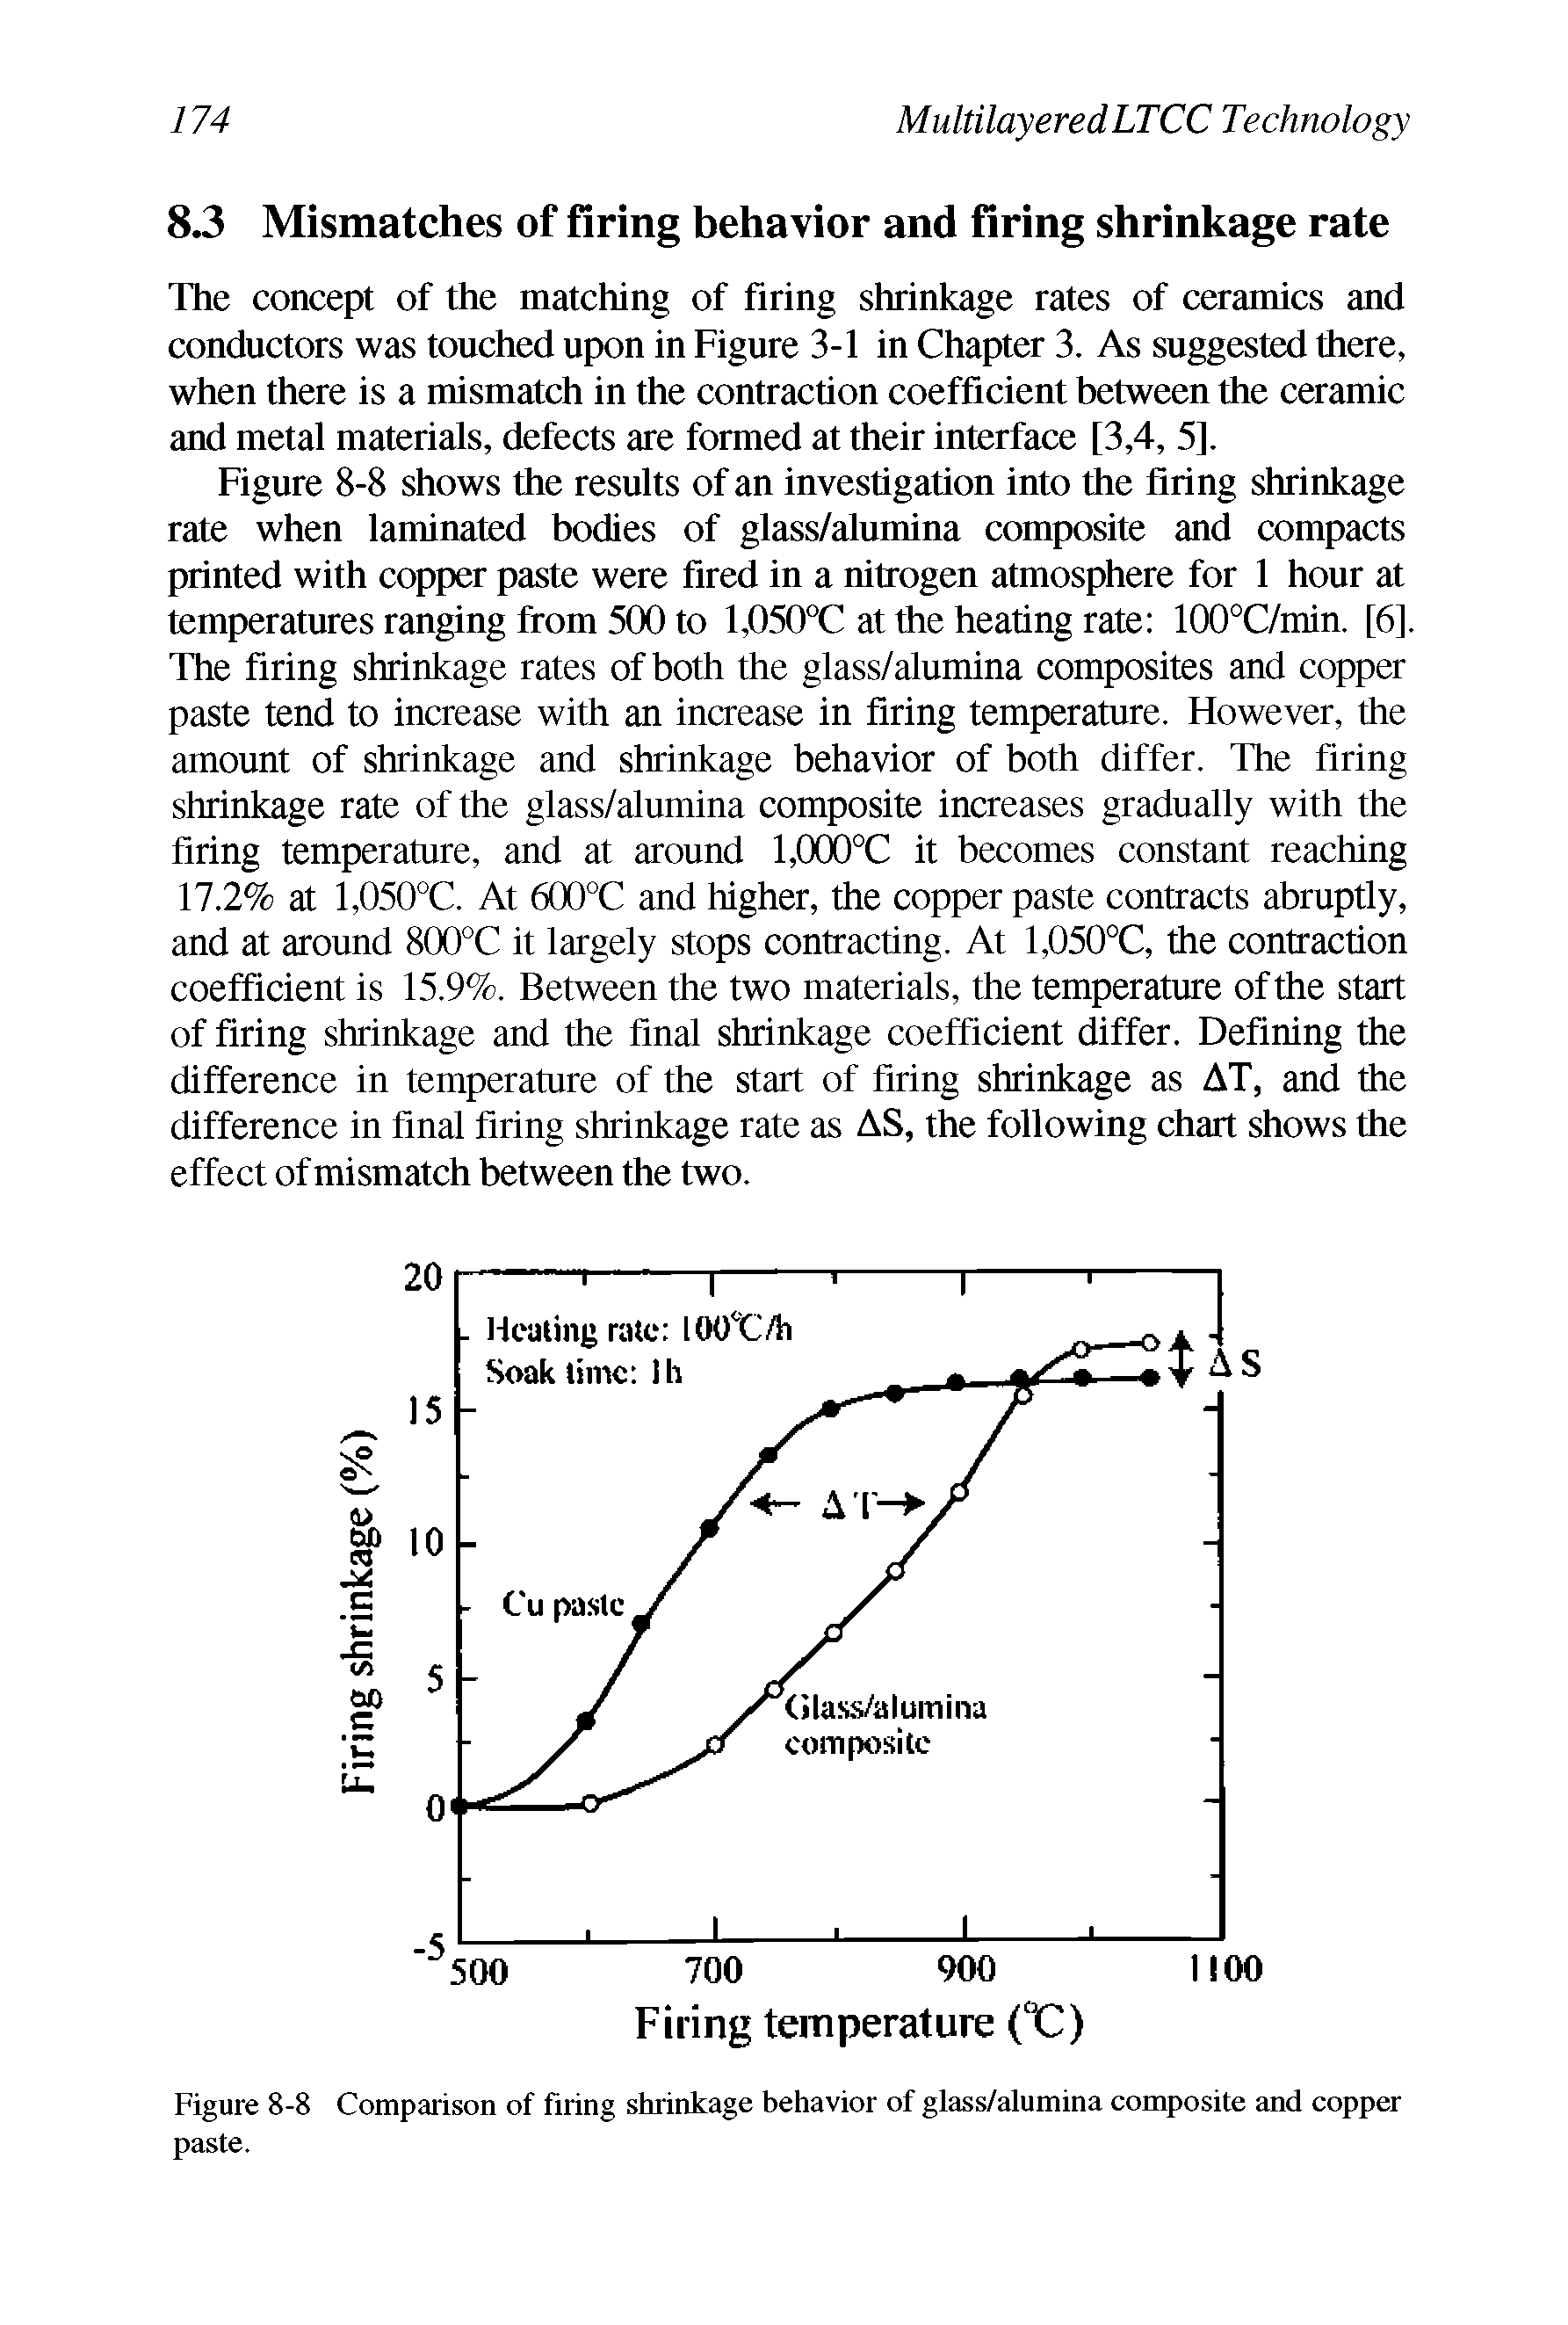 Figure 8-8 Comparison of firing shrinkage behavior of glass/alumina composite and copper paste.